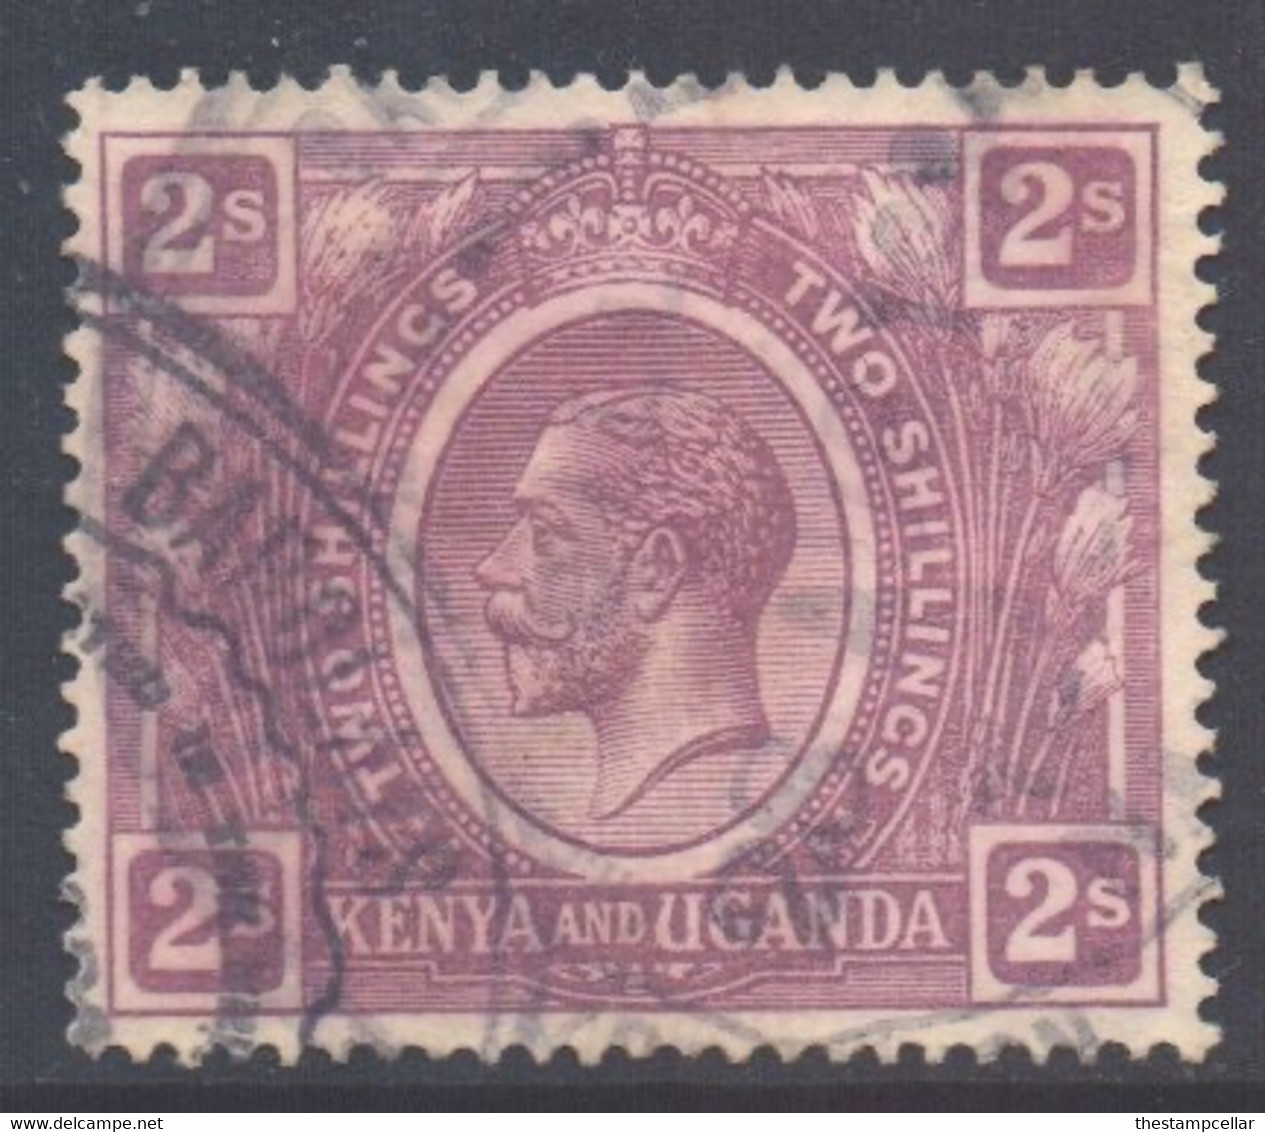 KUT Kenya-Uganda Scott 30 - SG88, 1922 George V 2/-  Used - Kenya & Ouganda